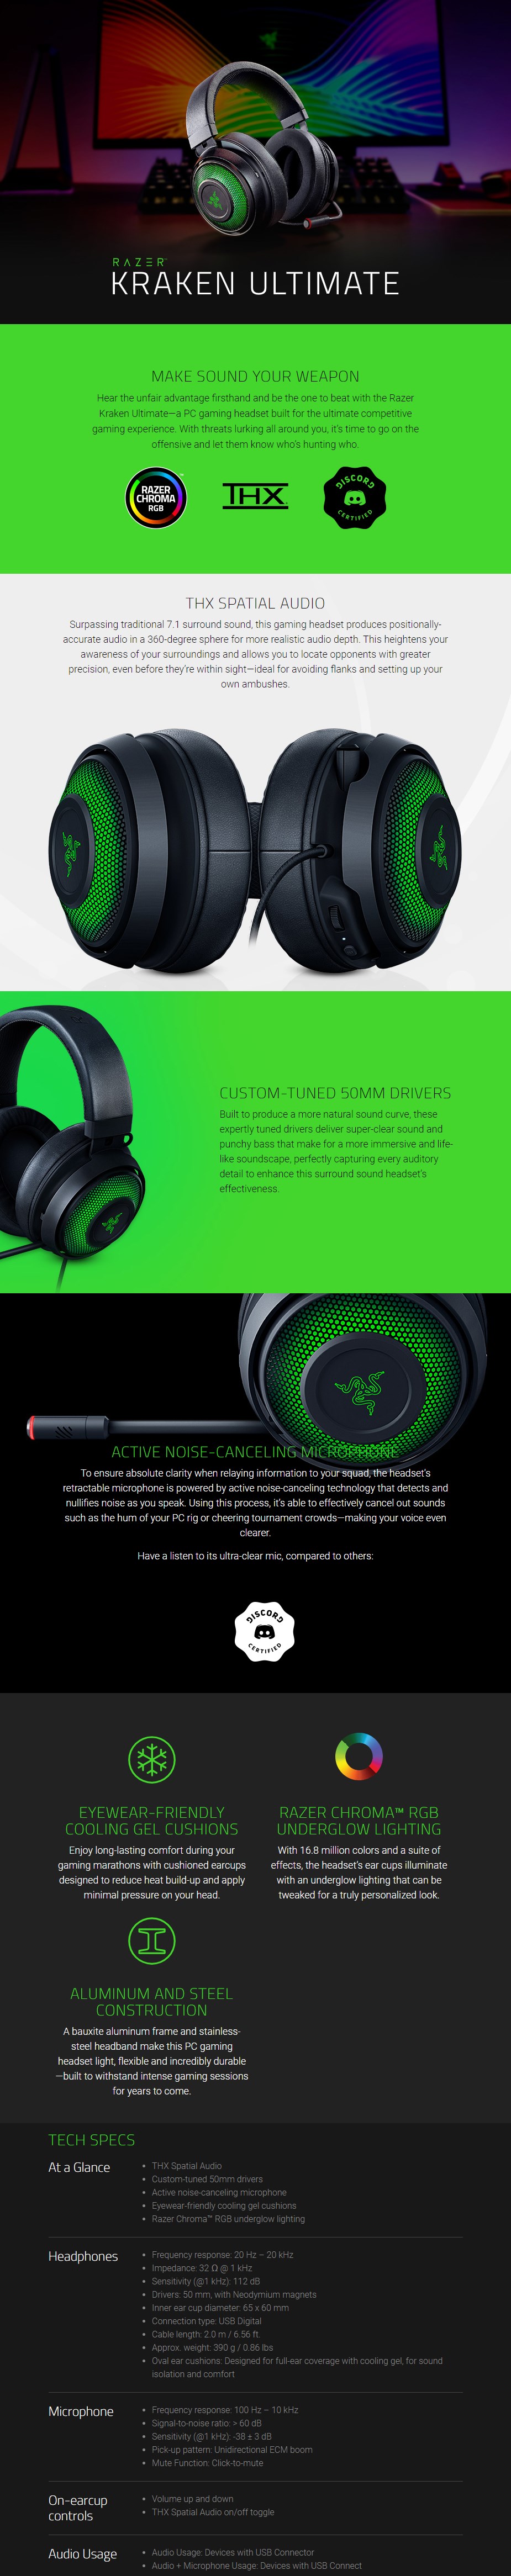 Razer Kraken Ultimate USB Surround Sound Chroma Gaming Headset - Overview 1